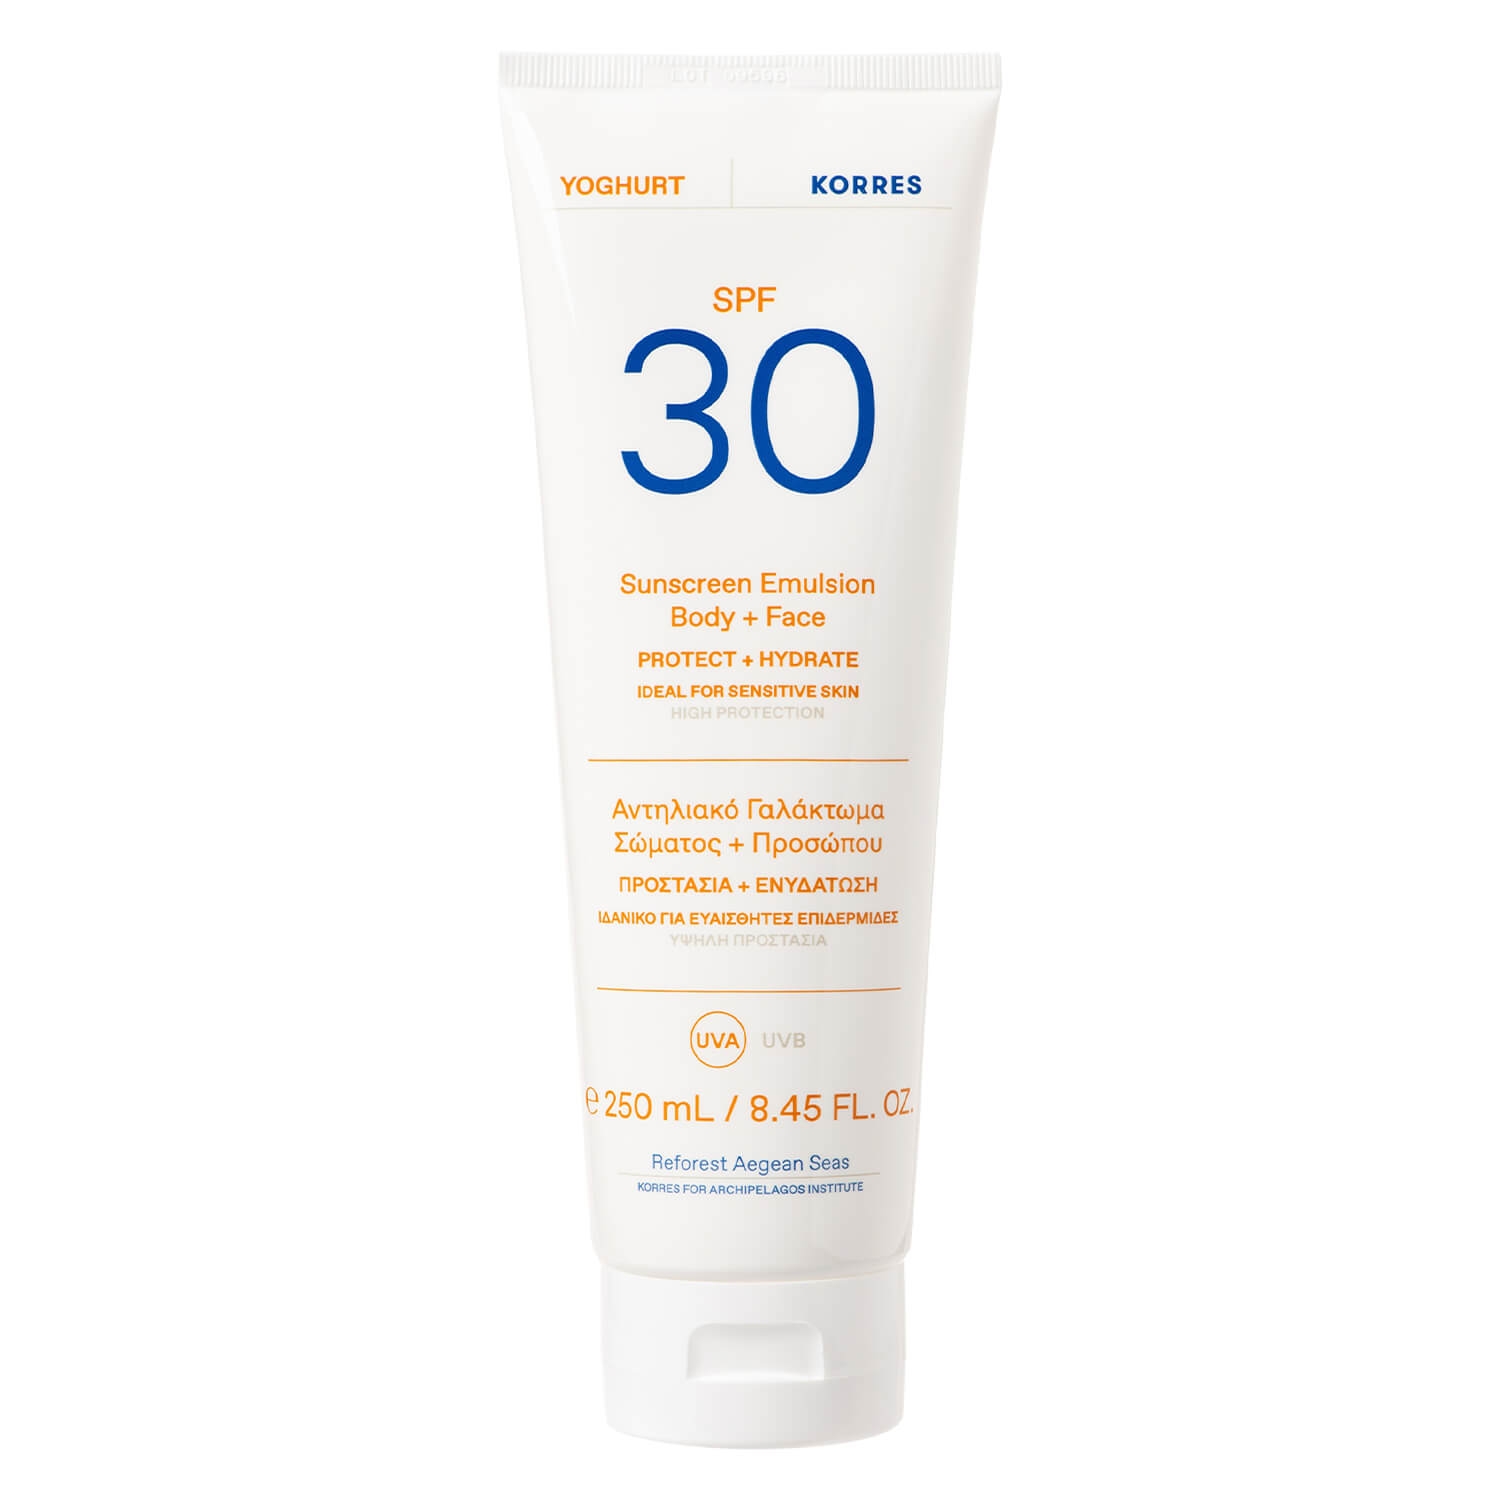 Produktbild von Korres Care - Yoghurt Sunscreen Emulsion Body + Face SPF30